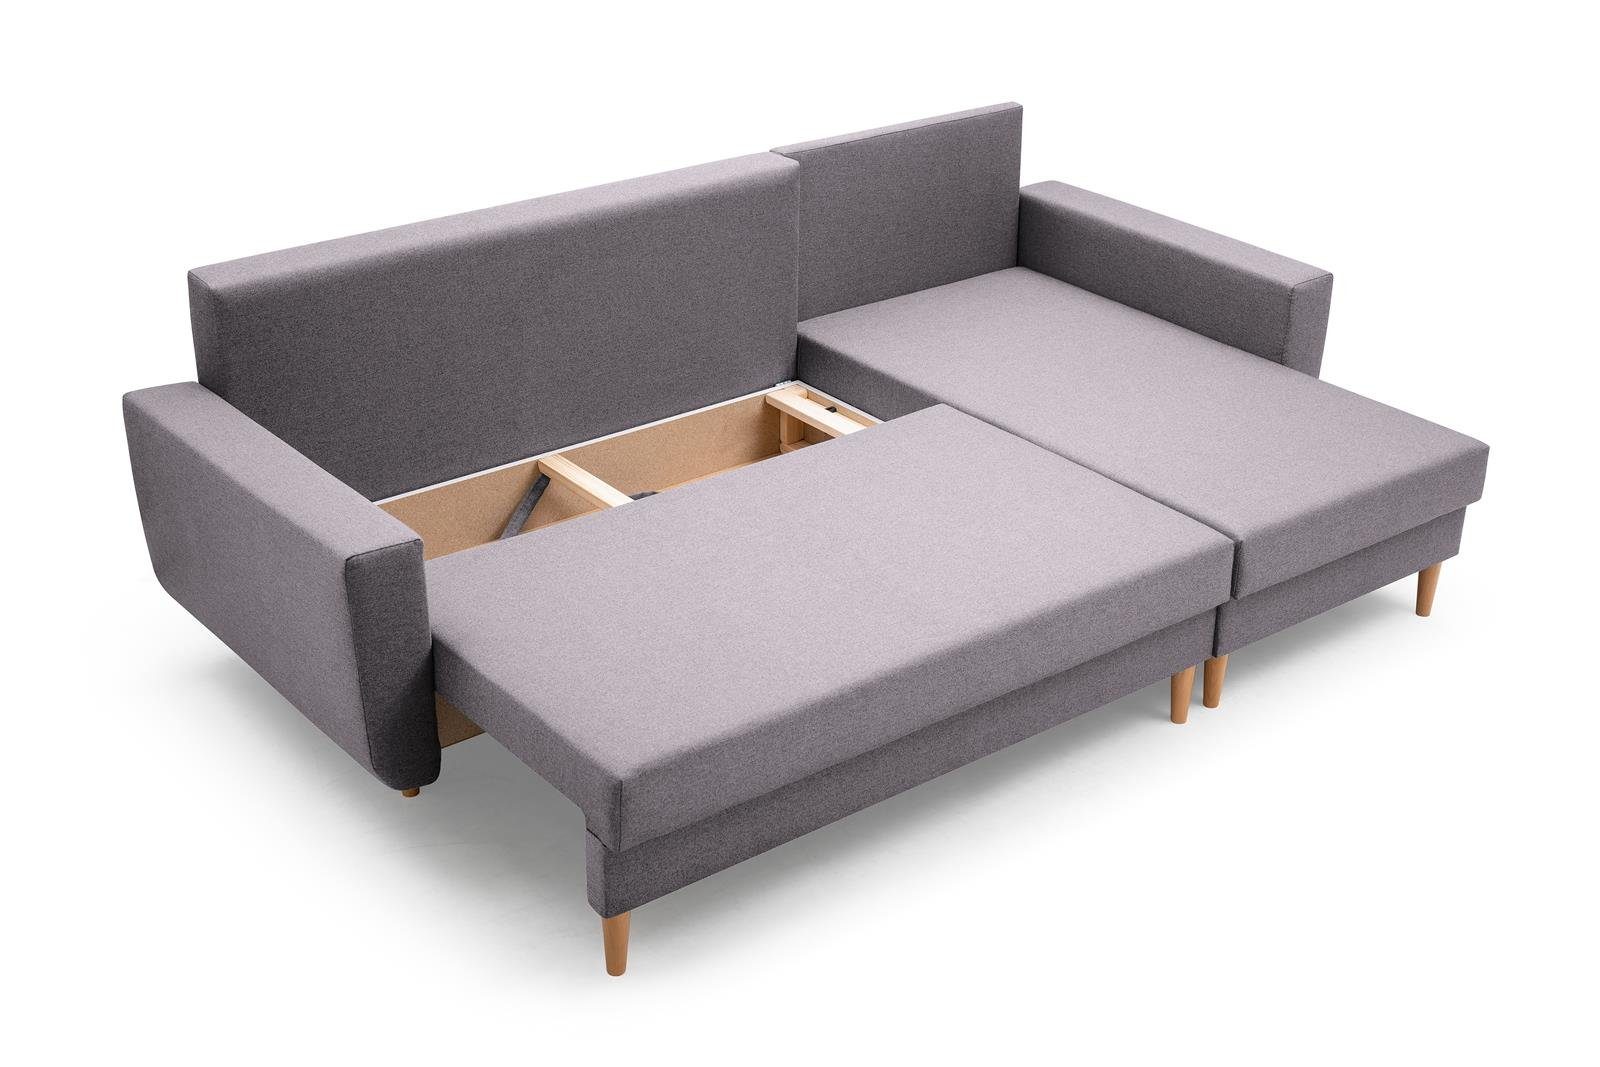 Beautysofa Polsterecke Couch Sofa (malmo Ecksofa Schlaffunktion, ONLY, mit 90) new universelle Hellgrau mit mane